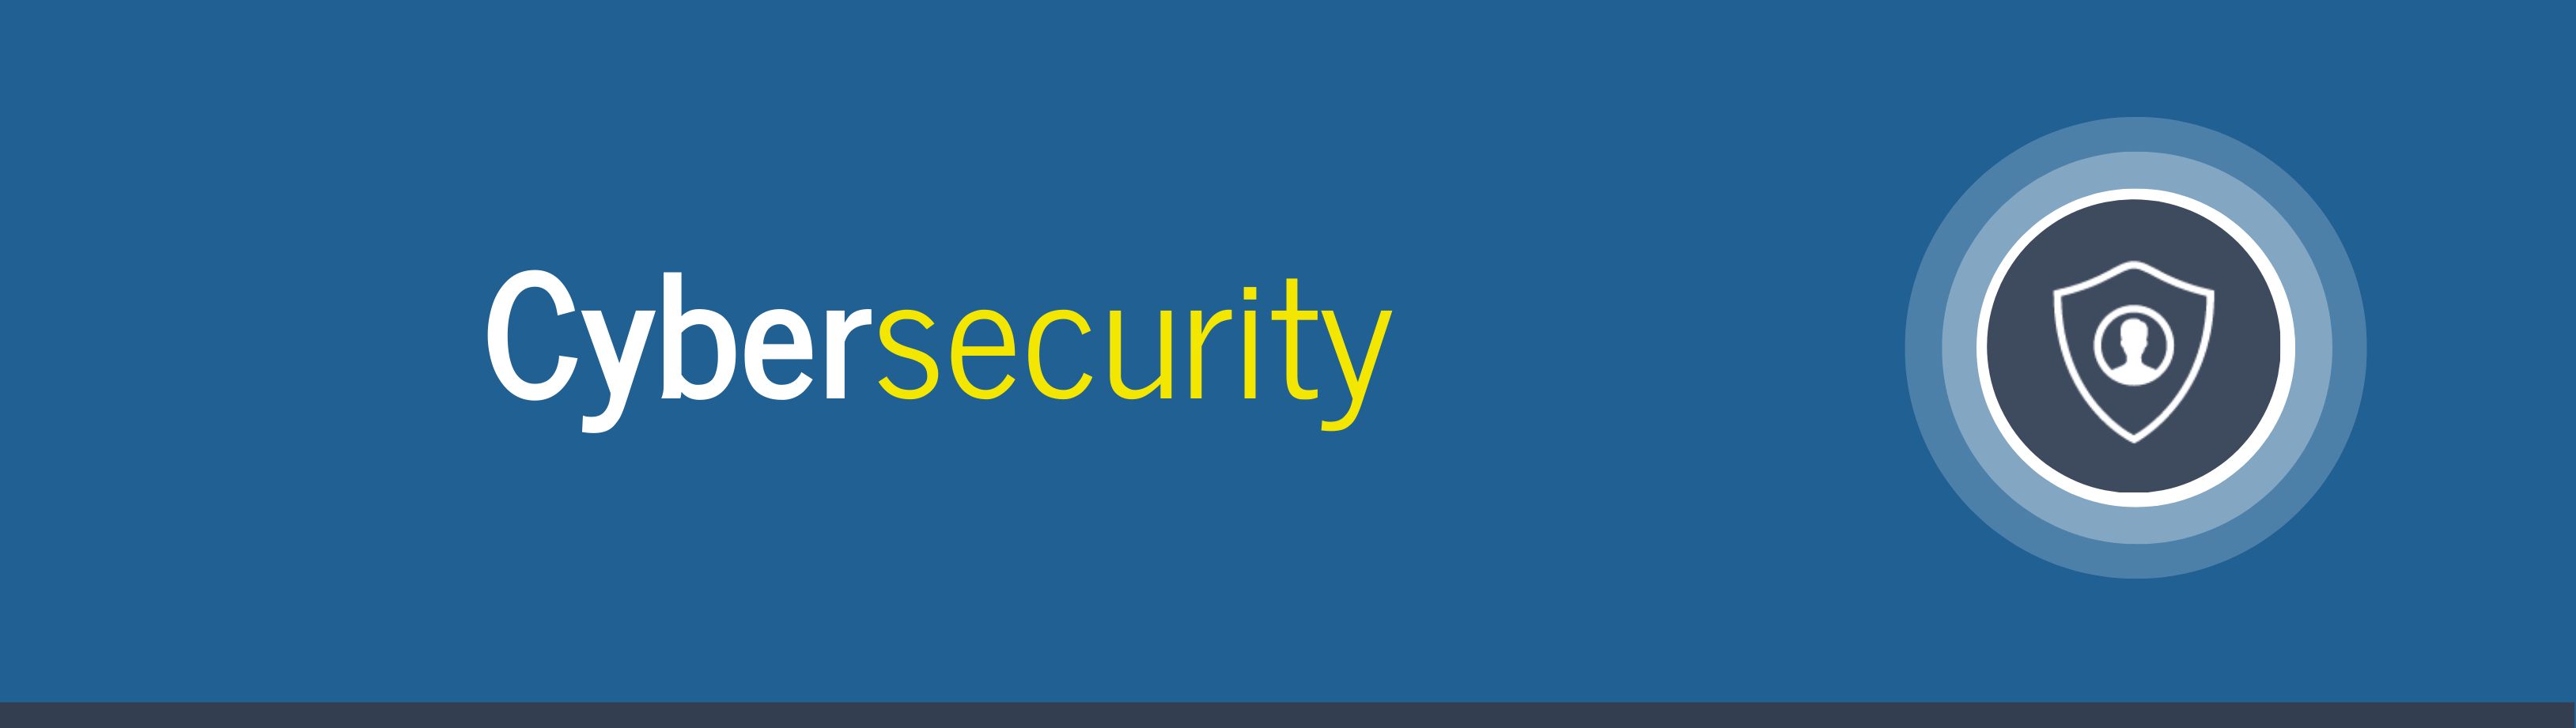 cybersecurity header